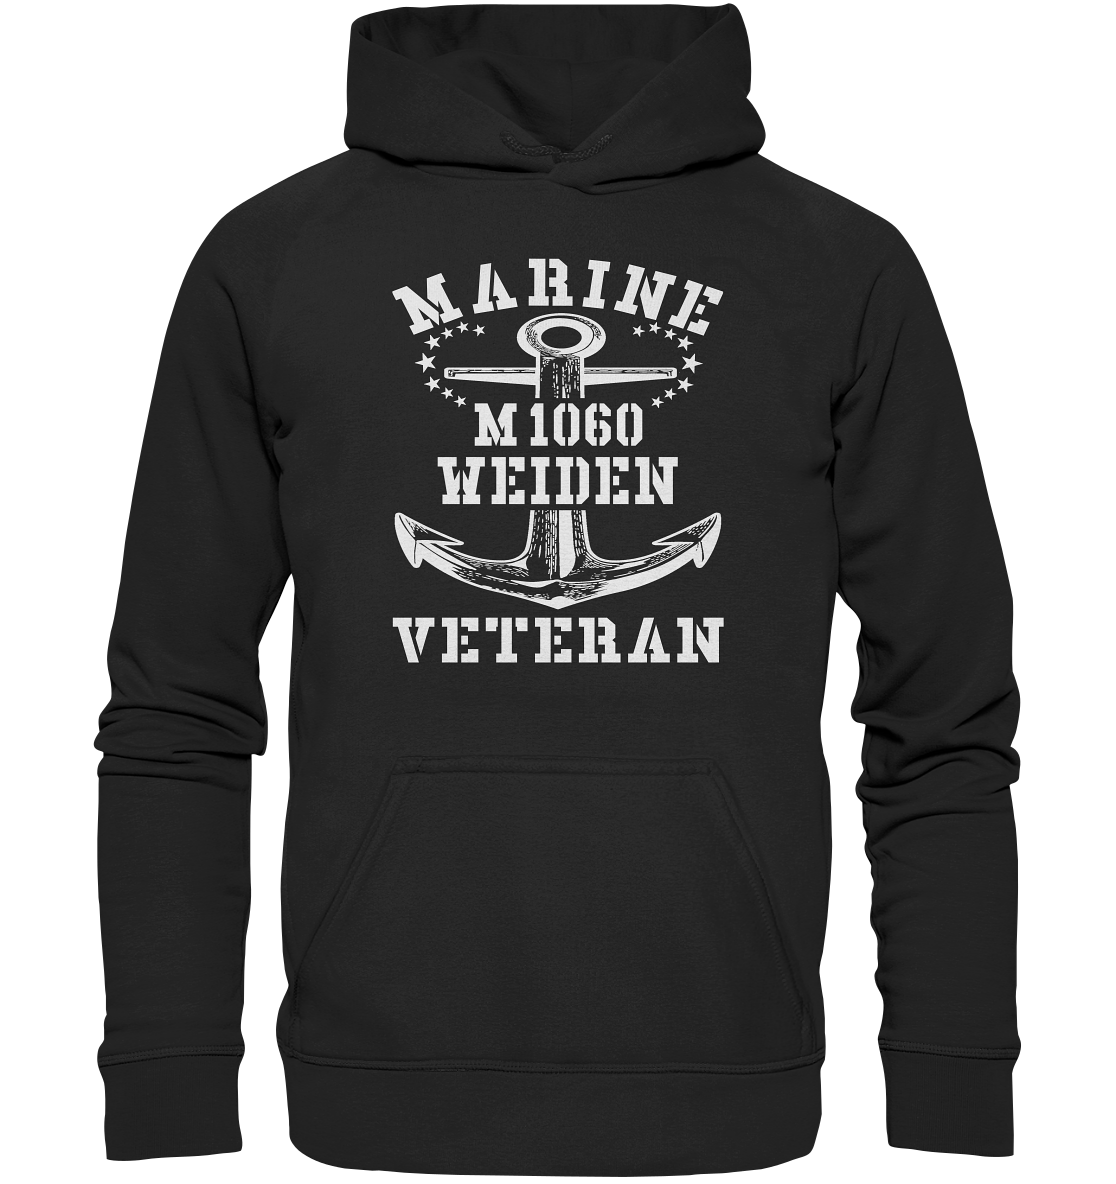 Mij.-Boot M1060 WEIDEN Marine Veteran - Basic Unisex Hoodie